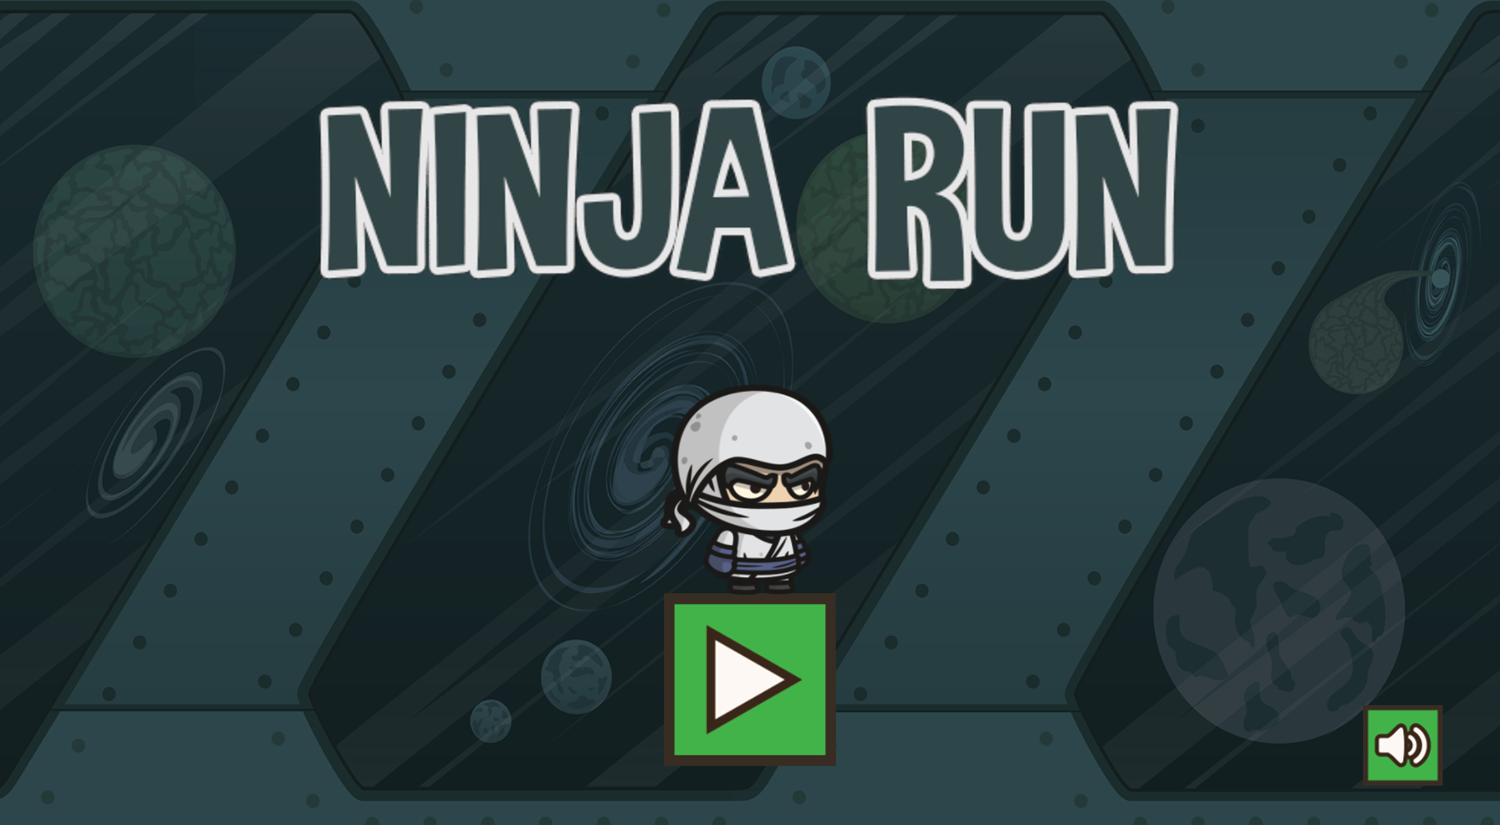 Ninja Run Game Welcome Screen Screenshot.